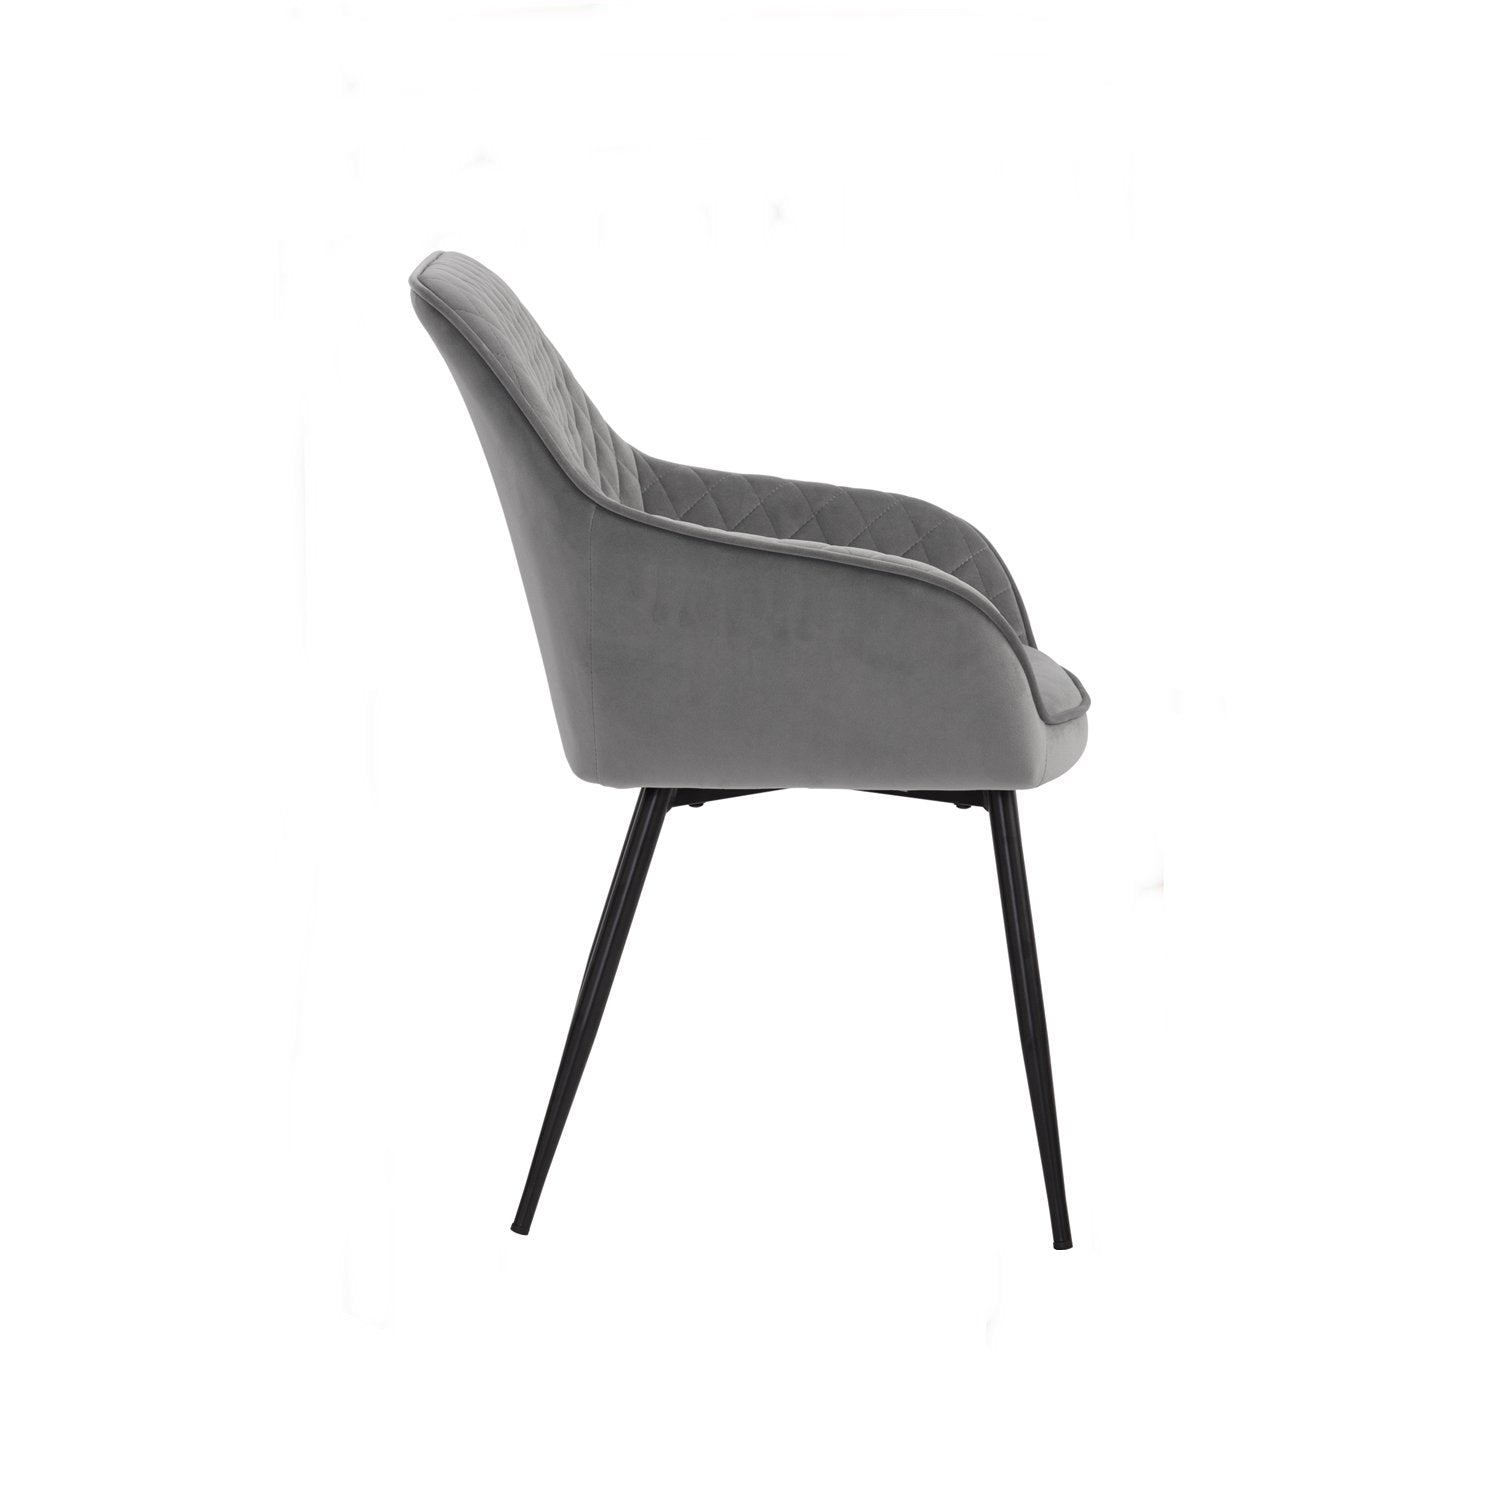 ZNTS Hakon Dining Chair - Grey Velvet 241247